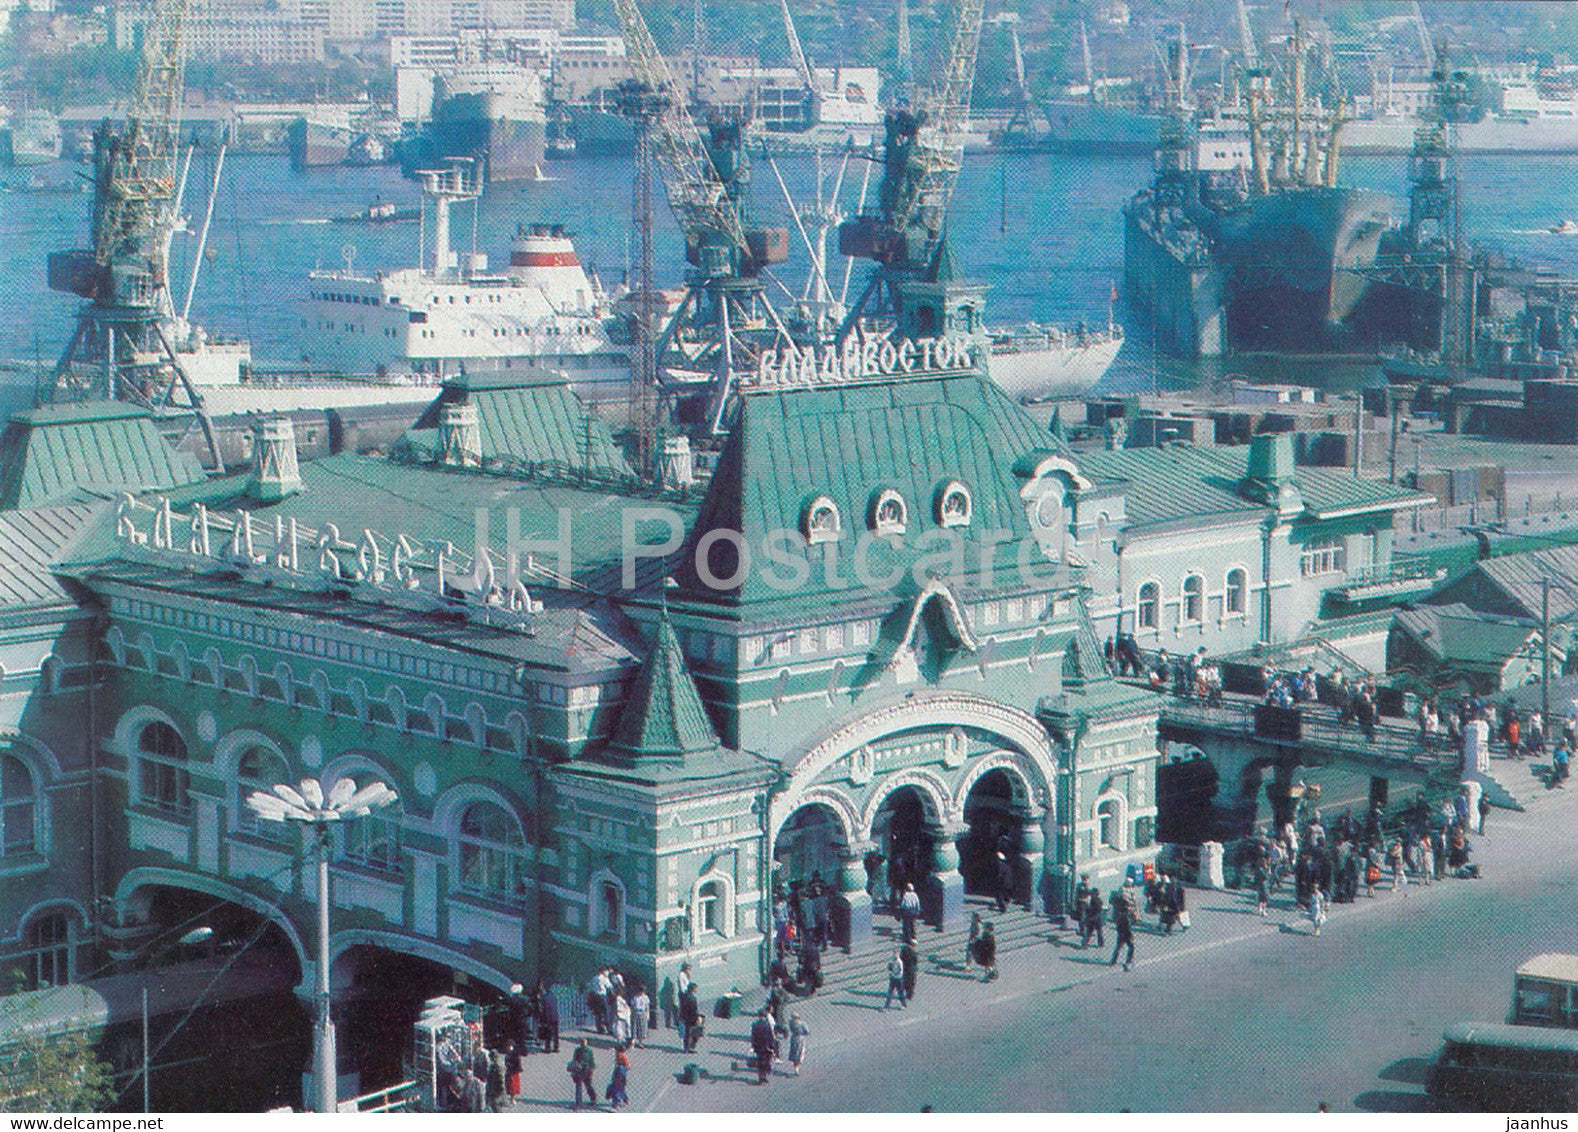 Vladivostok - Railway station - ship - postal stationery - 1991 - Russia USSR - unused - JH Postcards